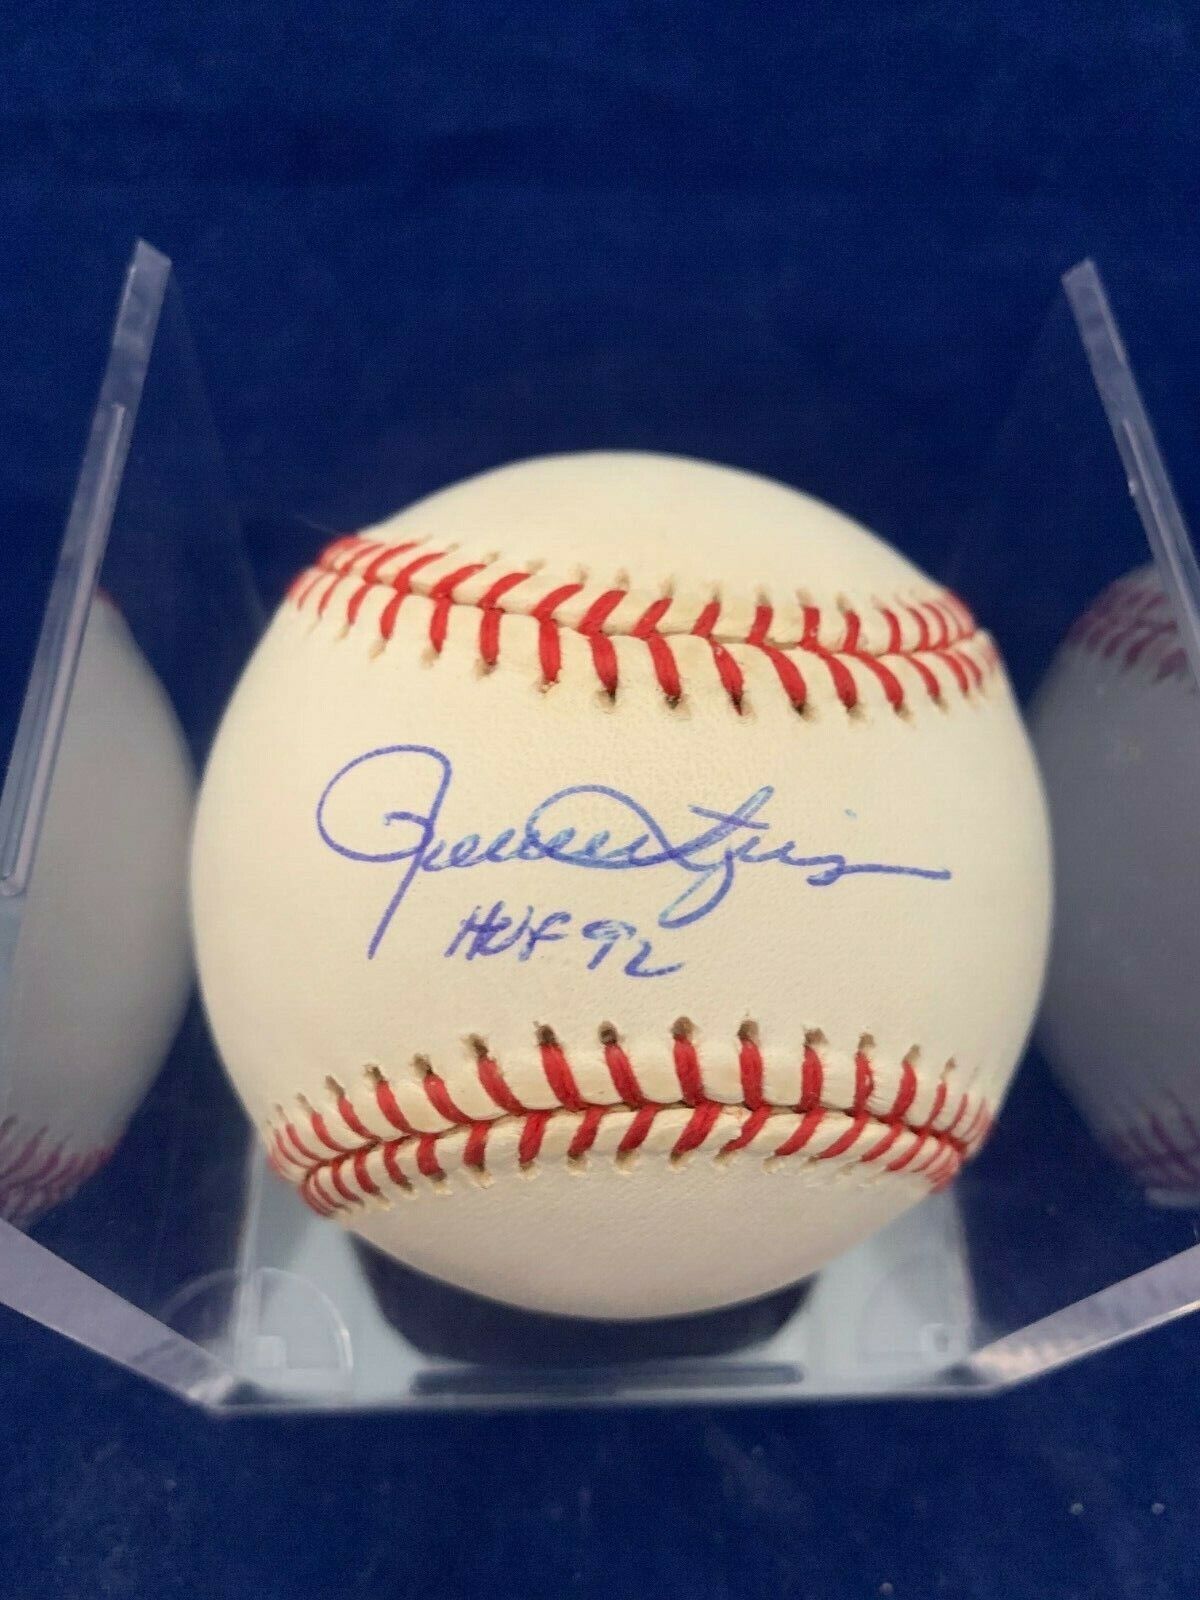 Rollie Fingers Signed Gene Budig Baseball with HOF 92 Inscription with JSA COA